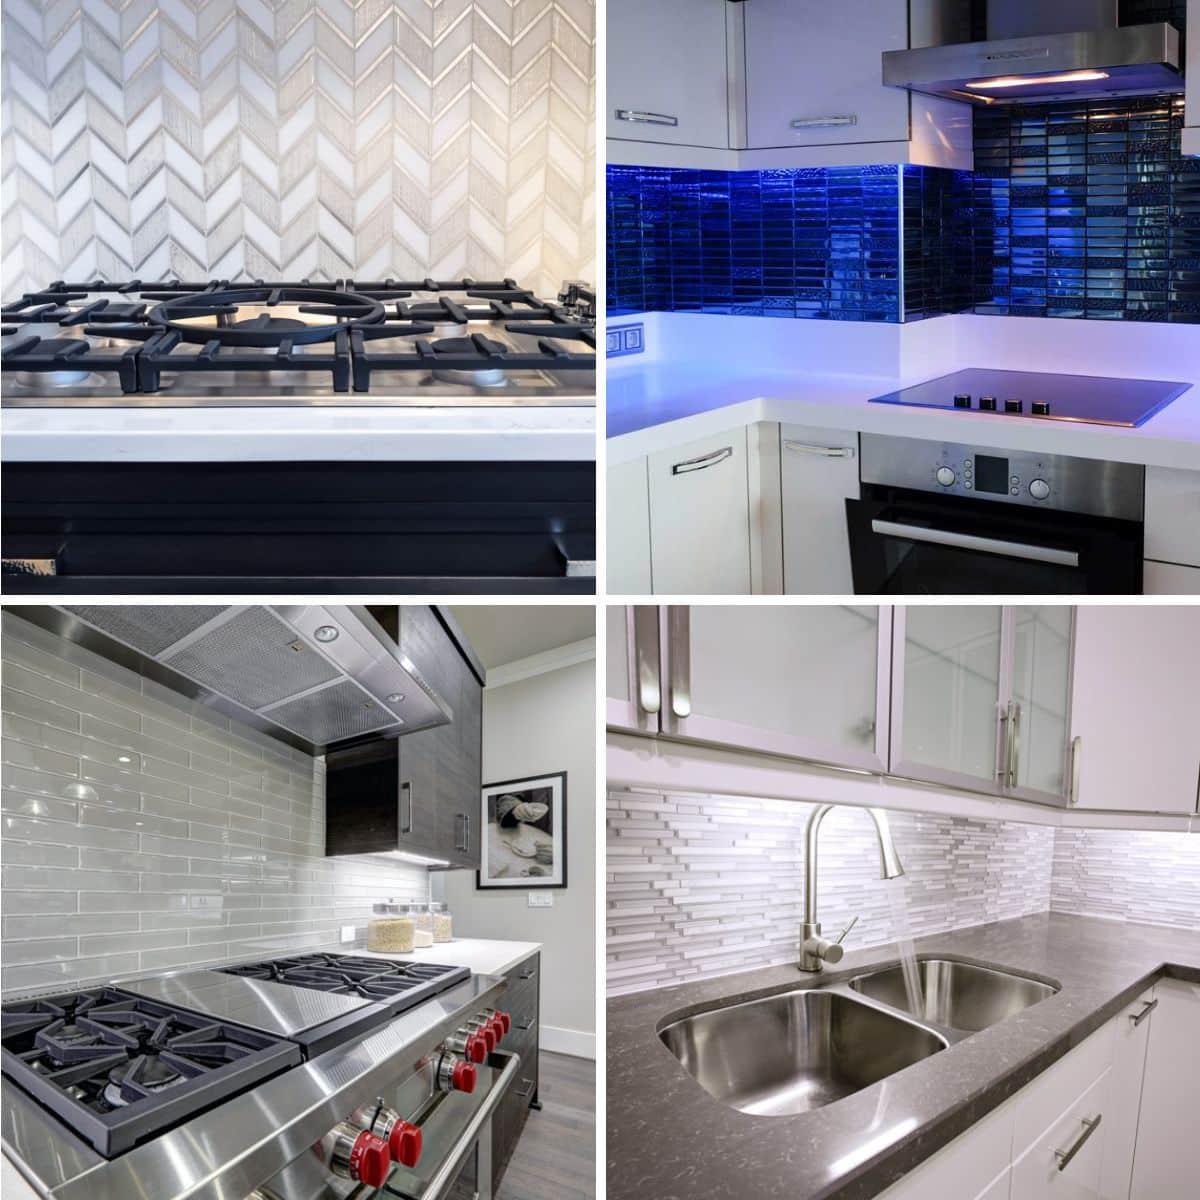 different kitchens with glass type tile backsplash